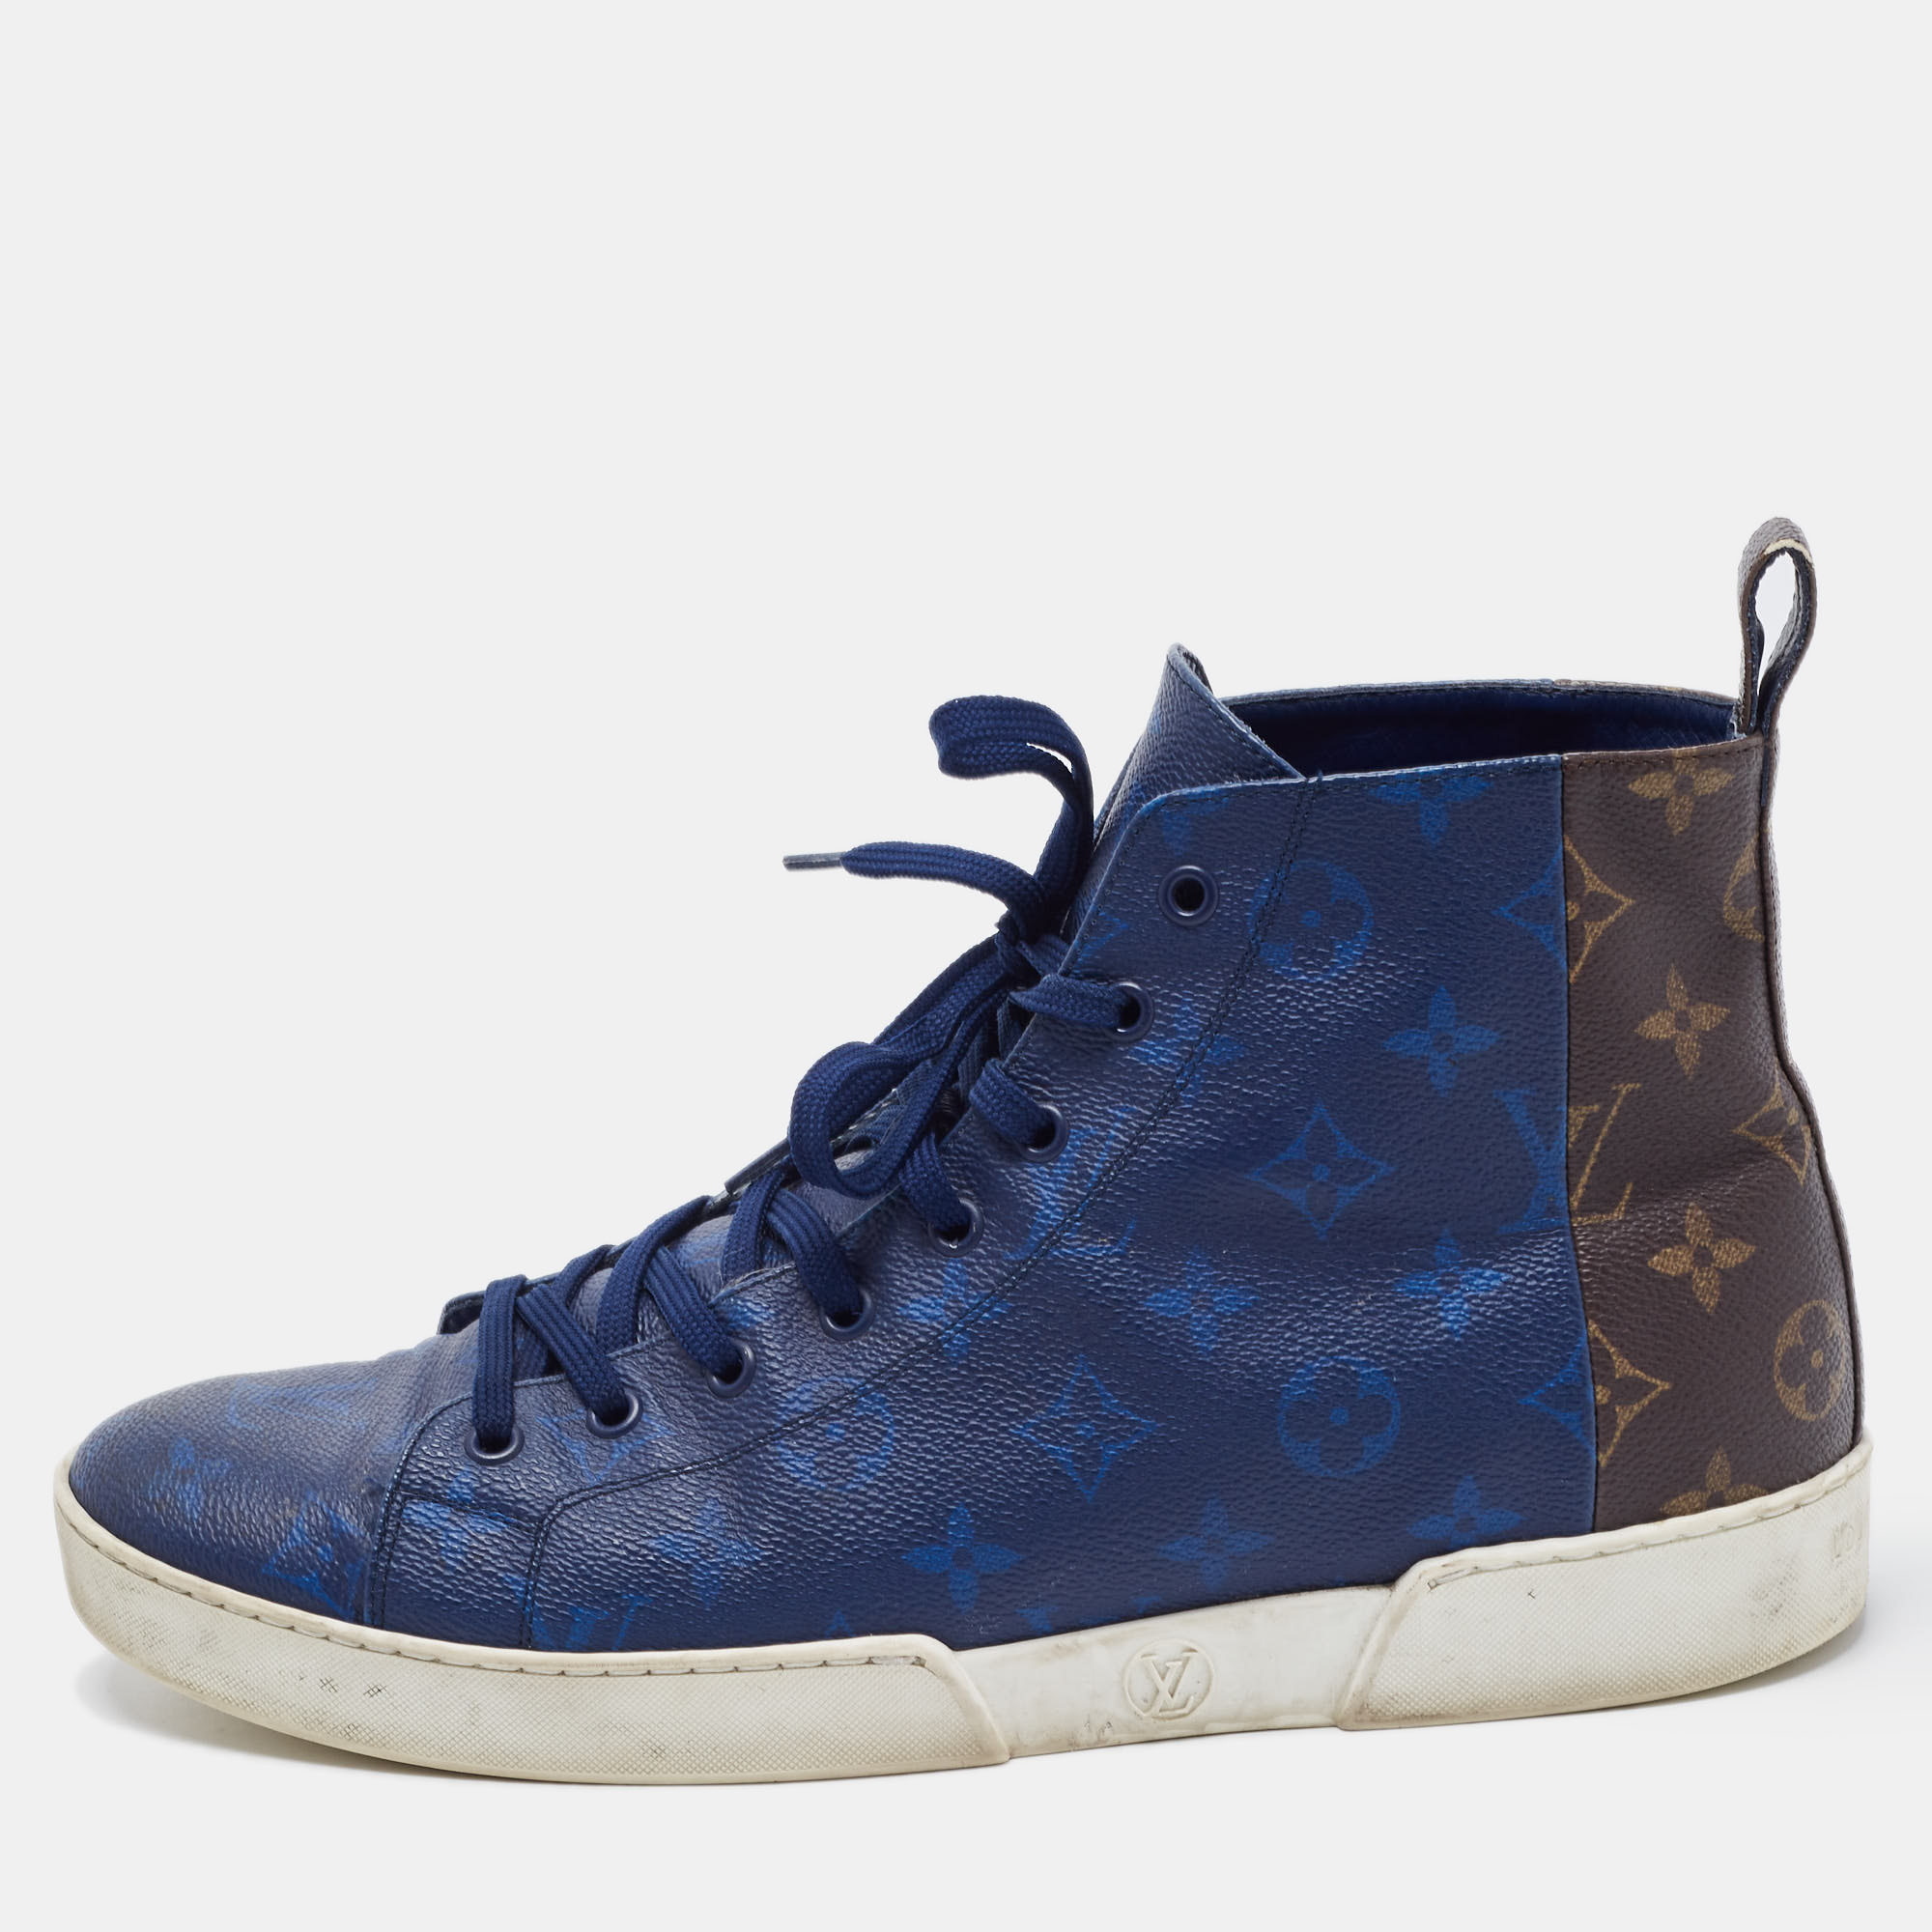 Louis vuitton blue/brown monogram canvas high top sneakers size 42.5